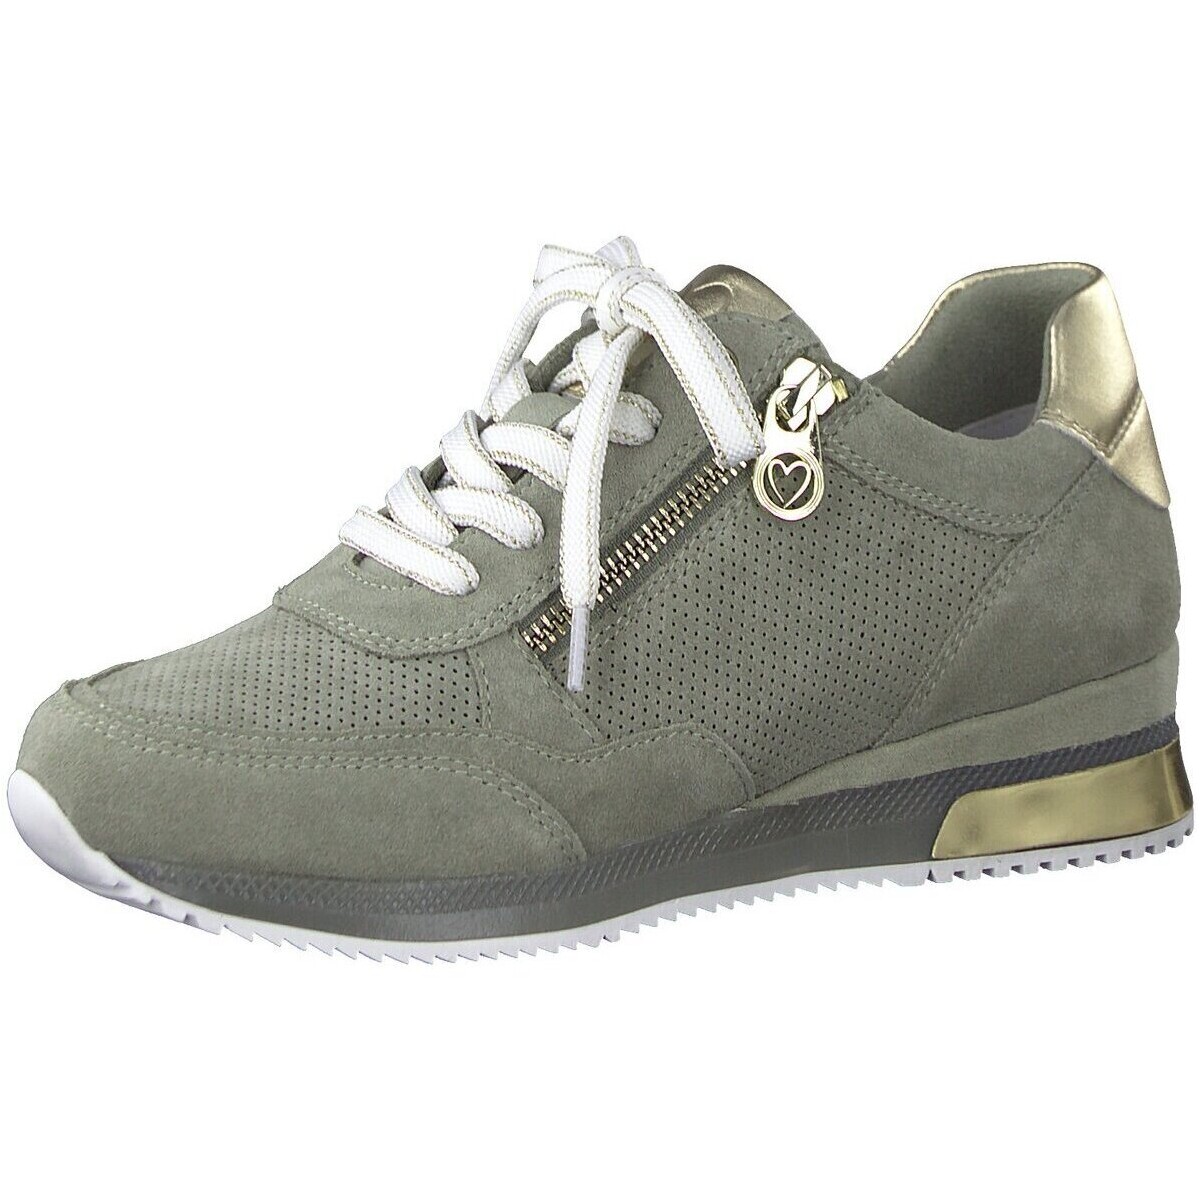 Schuhe Damen Sneaker Marco Tozzi feel+leather 50% RPET Lin Ago 2-2-23738-20/765 Grün